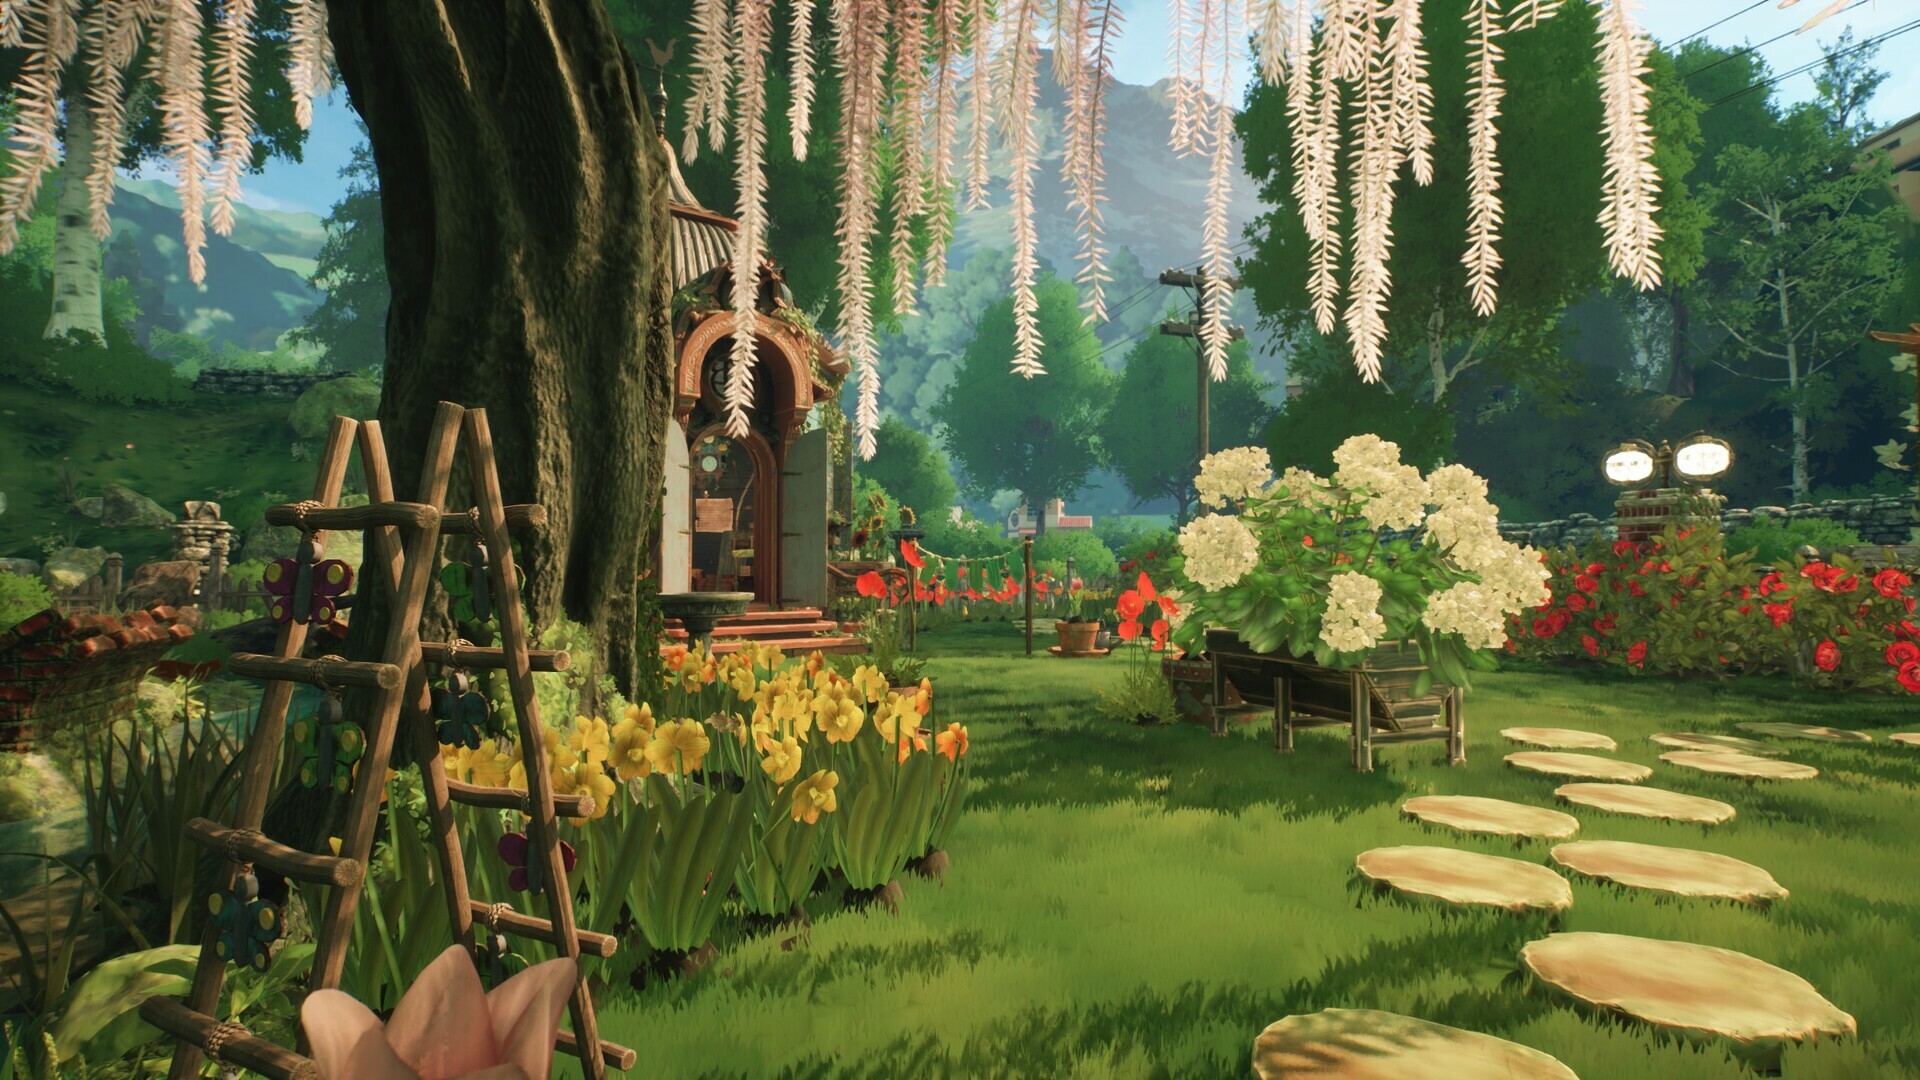 Garden Life: A Cozy Simulator PRE-ORDER Steam CD Key